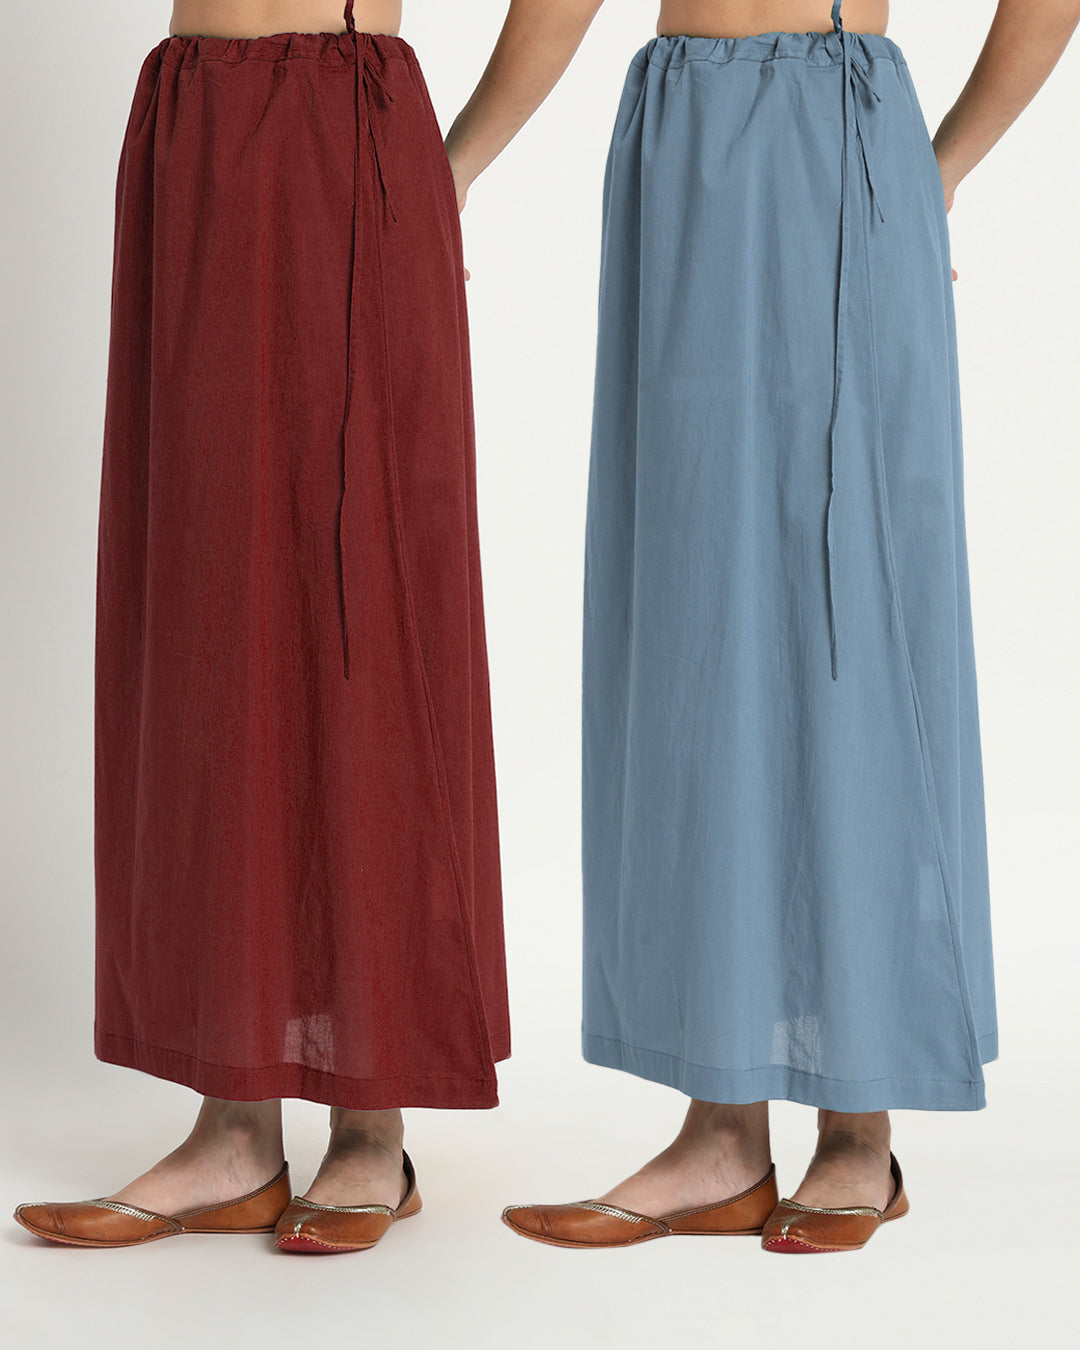 Combo: Russet Red & Blue Dawn Peekaboo Petticoat- Set of 2